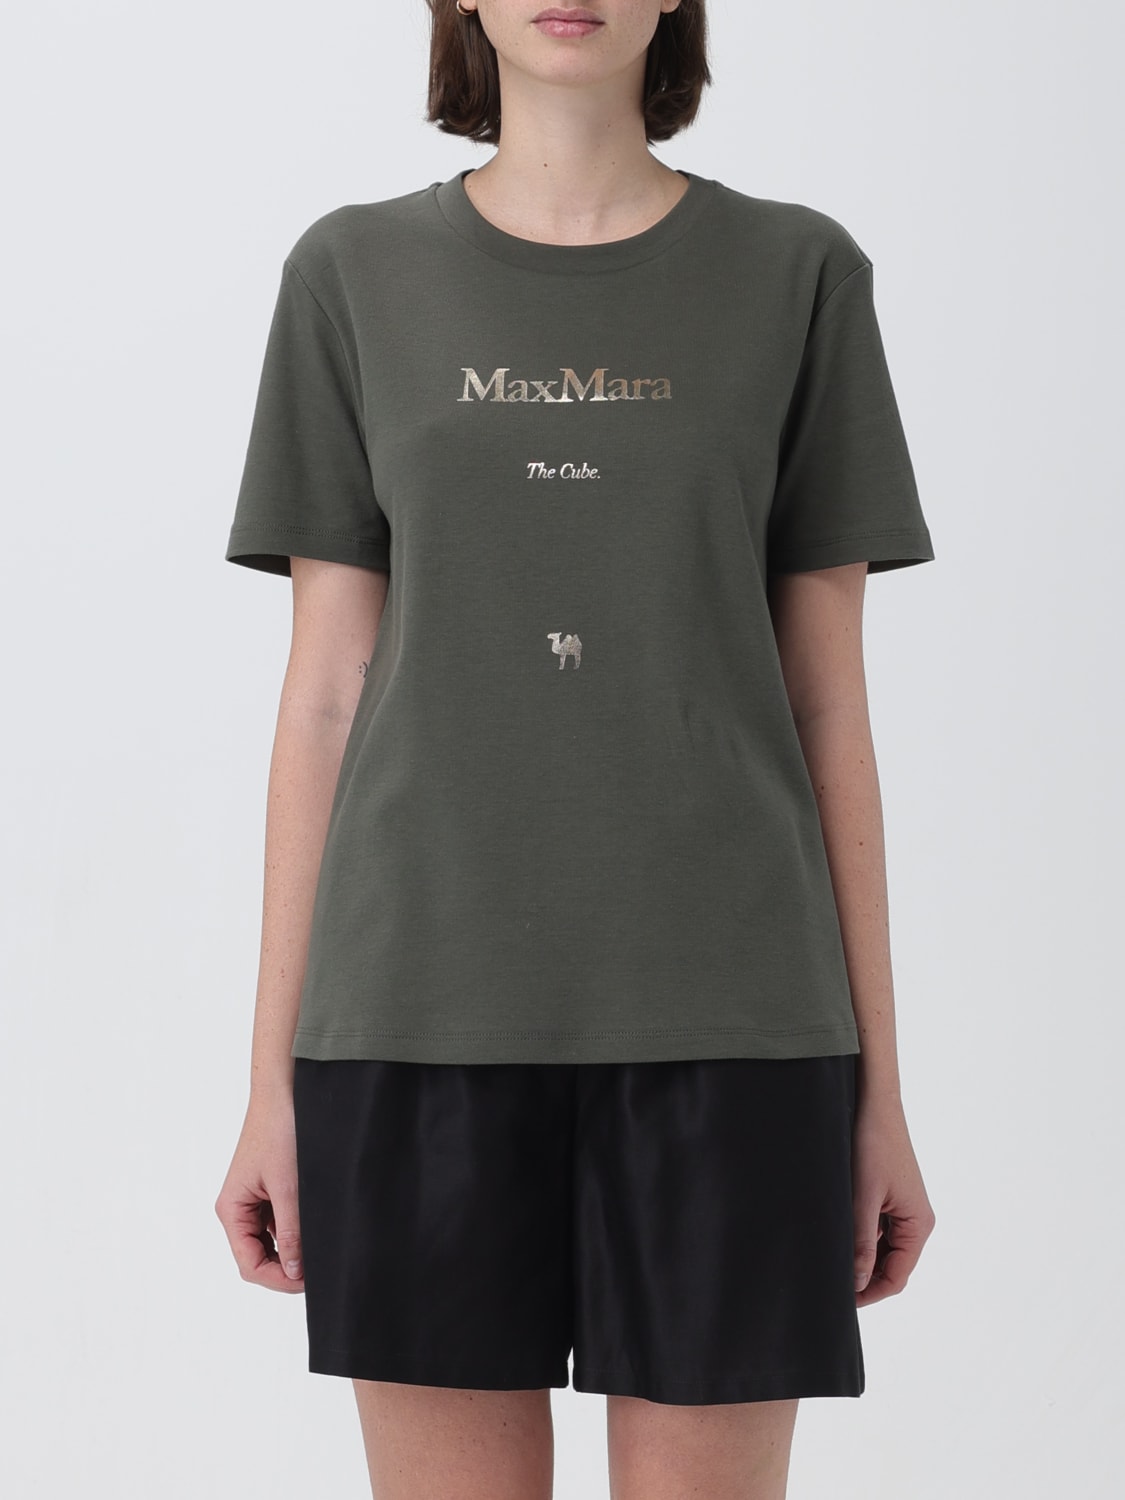 Tシャツ レディース 's Max Mara